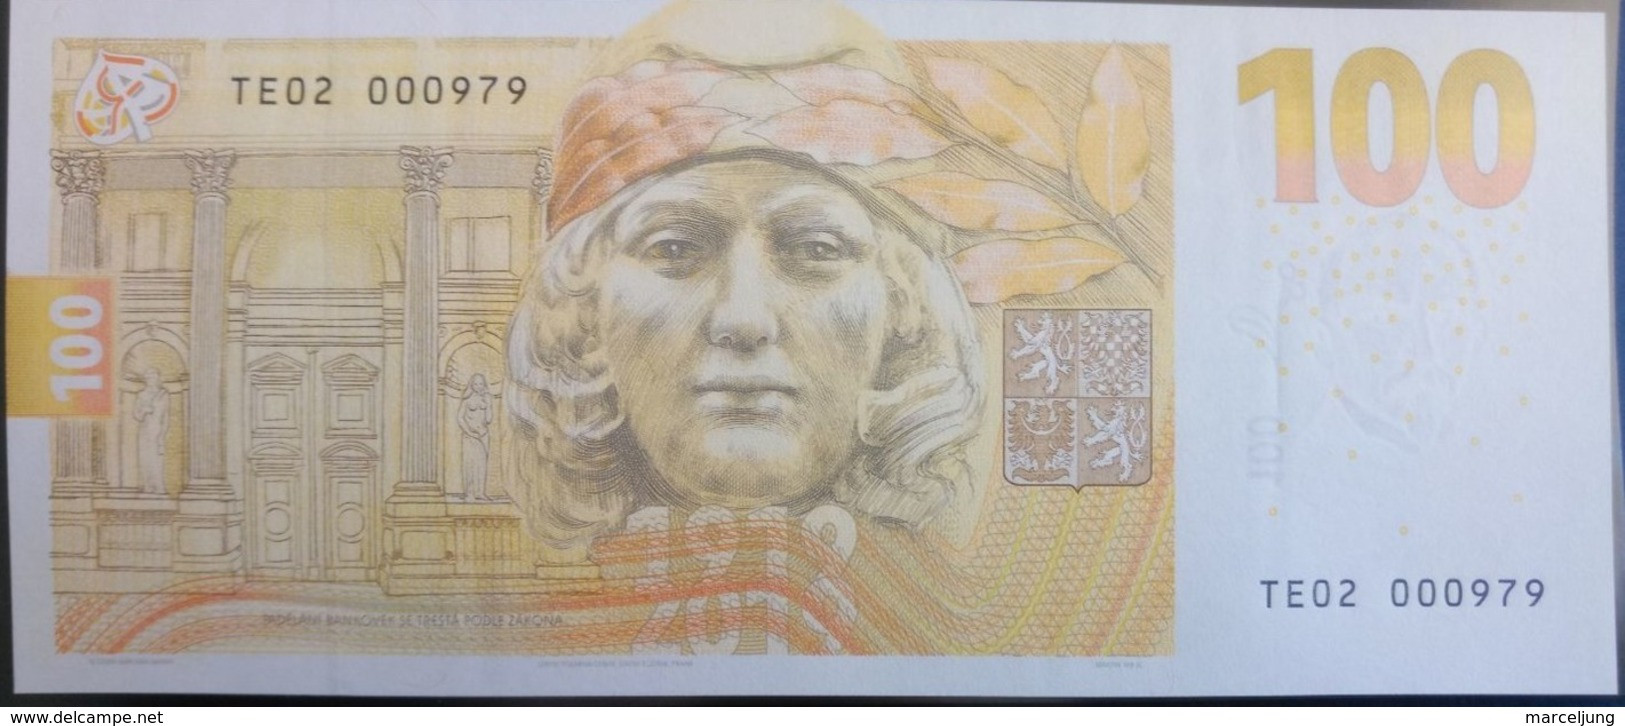 100 Korun/Kronen Czech Republic UNC 2019 Commemorative Banknote, Rare / GEDENKBANKNOTE SELTEN - Repubblica Ceca